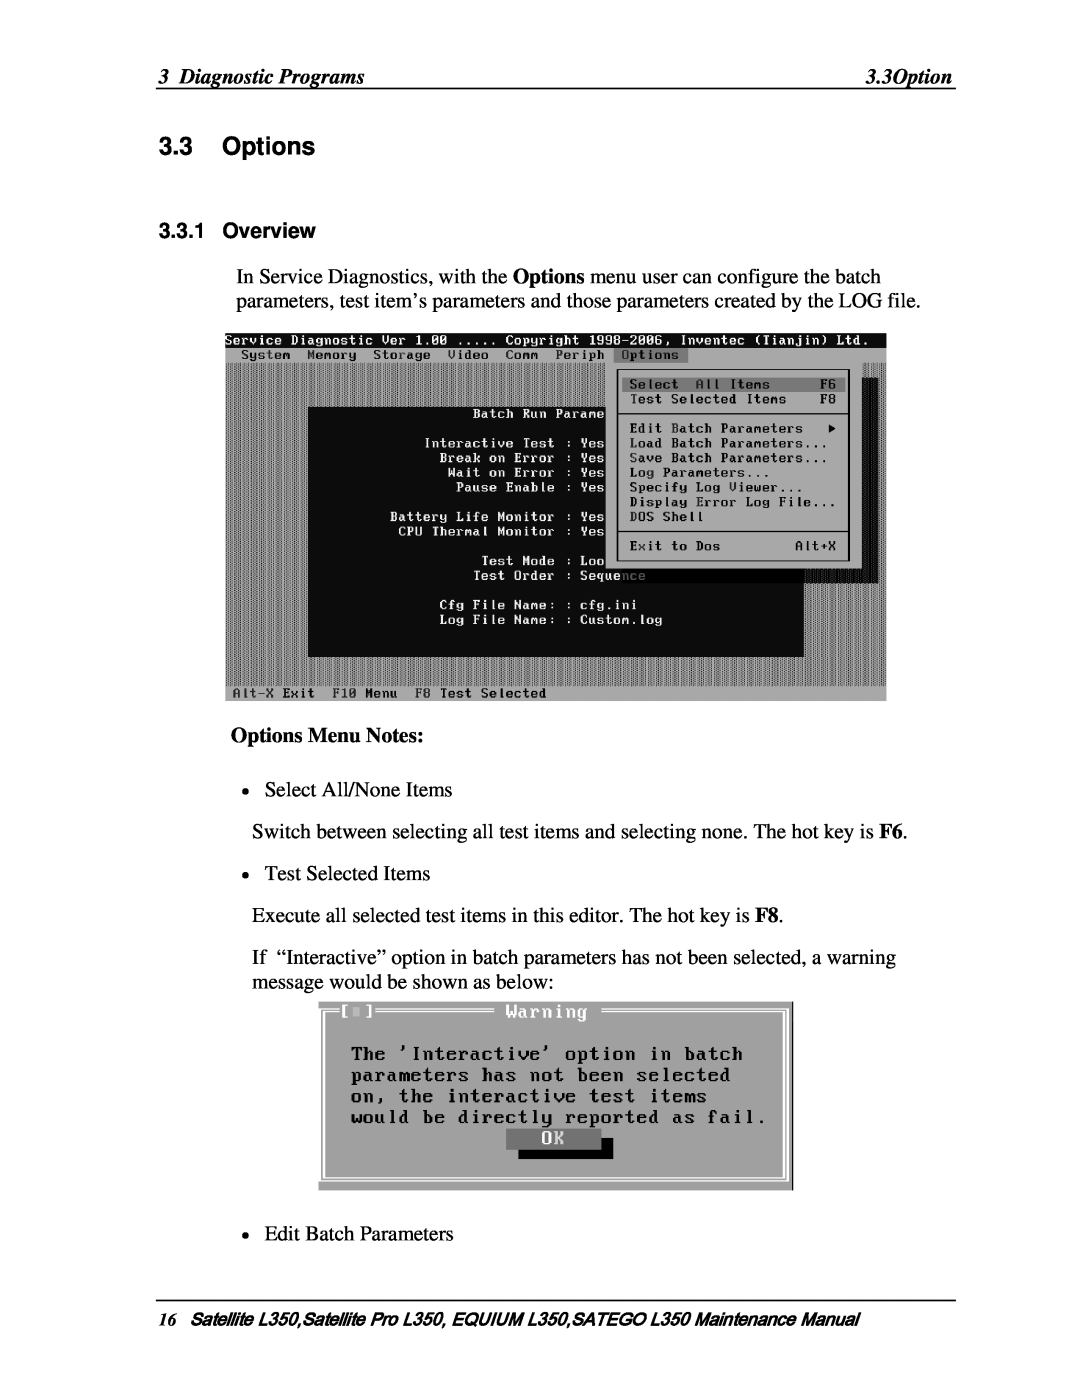 Toshiba PSLD1X, PSLD2X, PSLD3X manual Overview, Options Menu Notes 